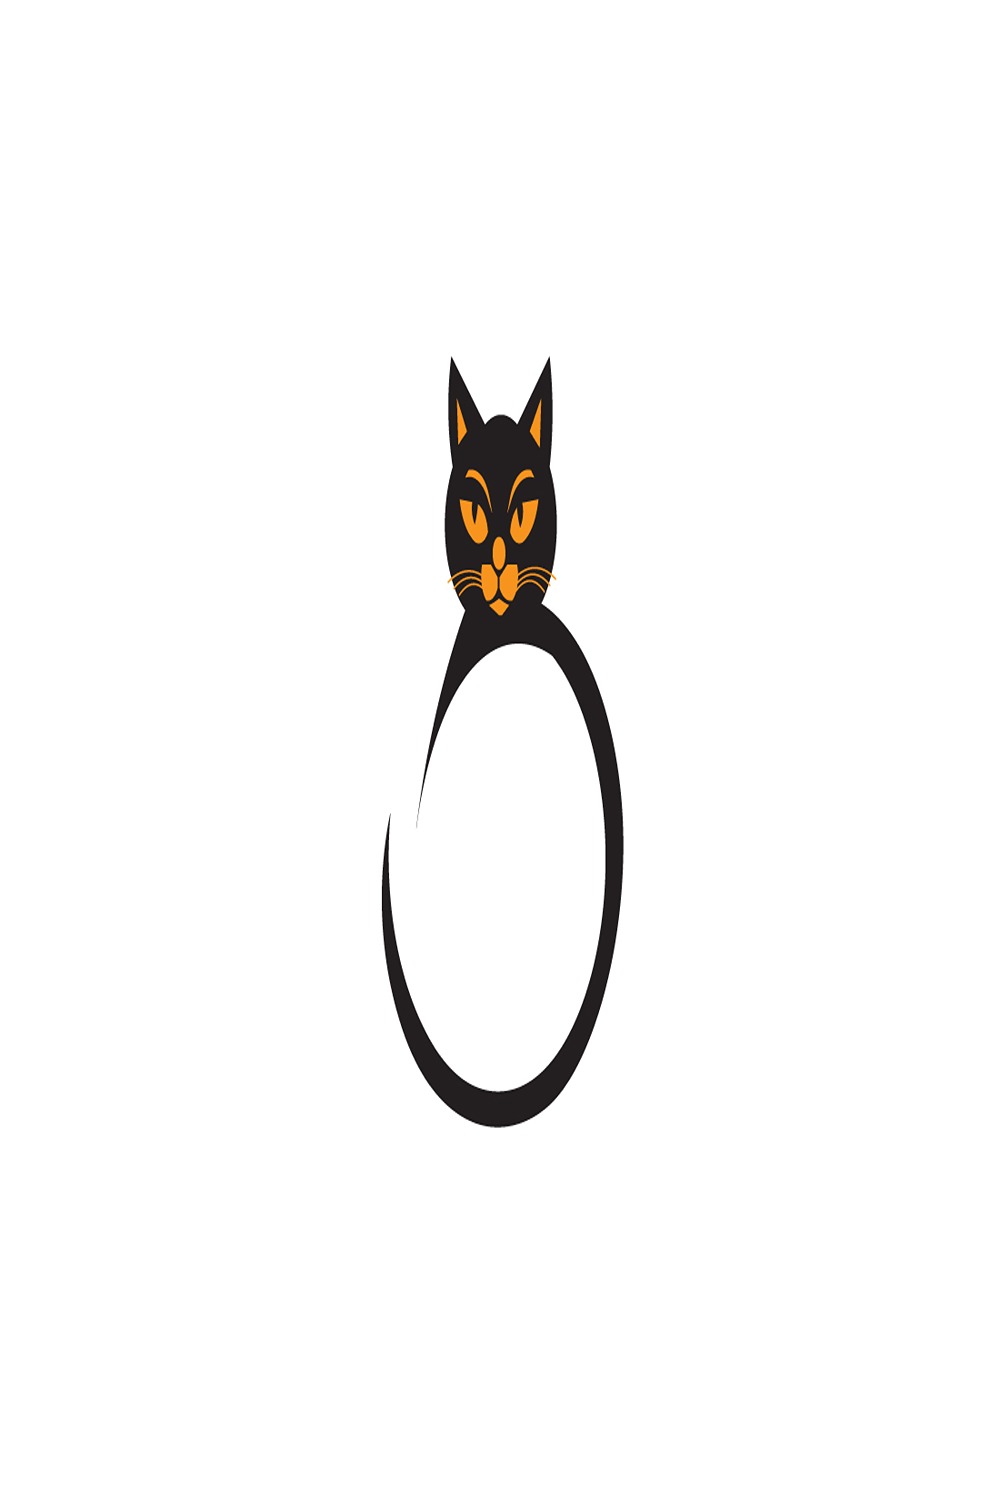 Cat - Logo Design Template pinterest preview image.